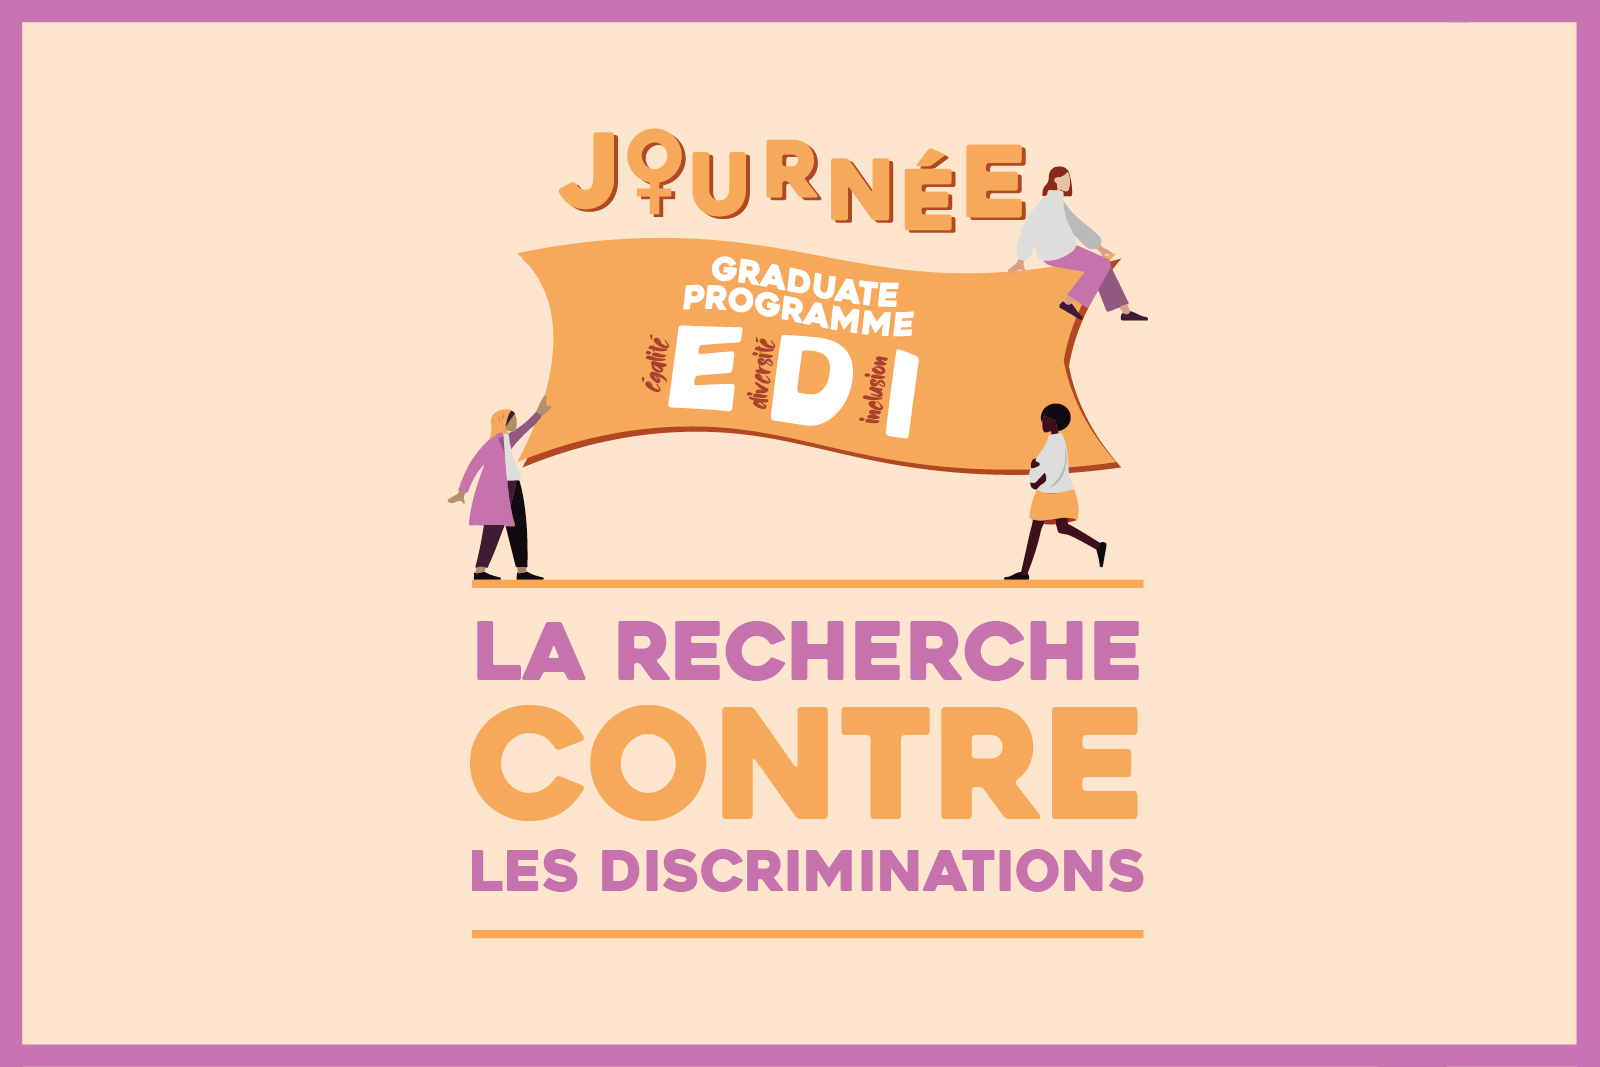 Graduate programme EDI La recherche contre les discriminations